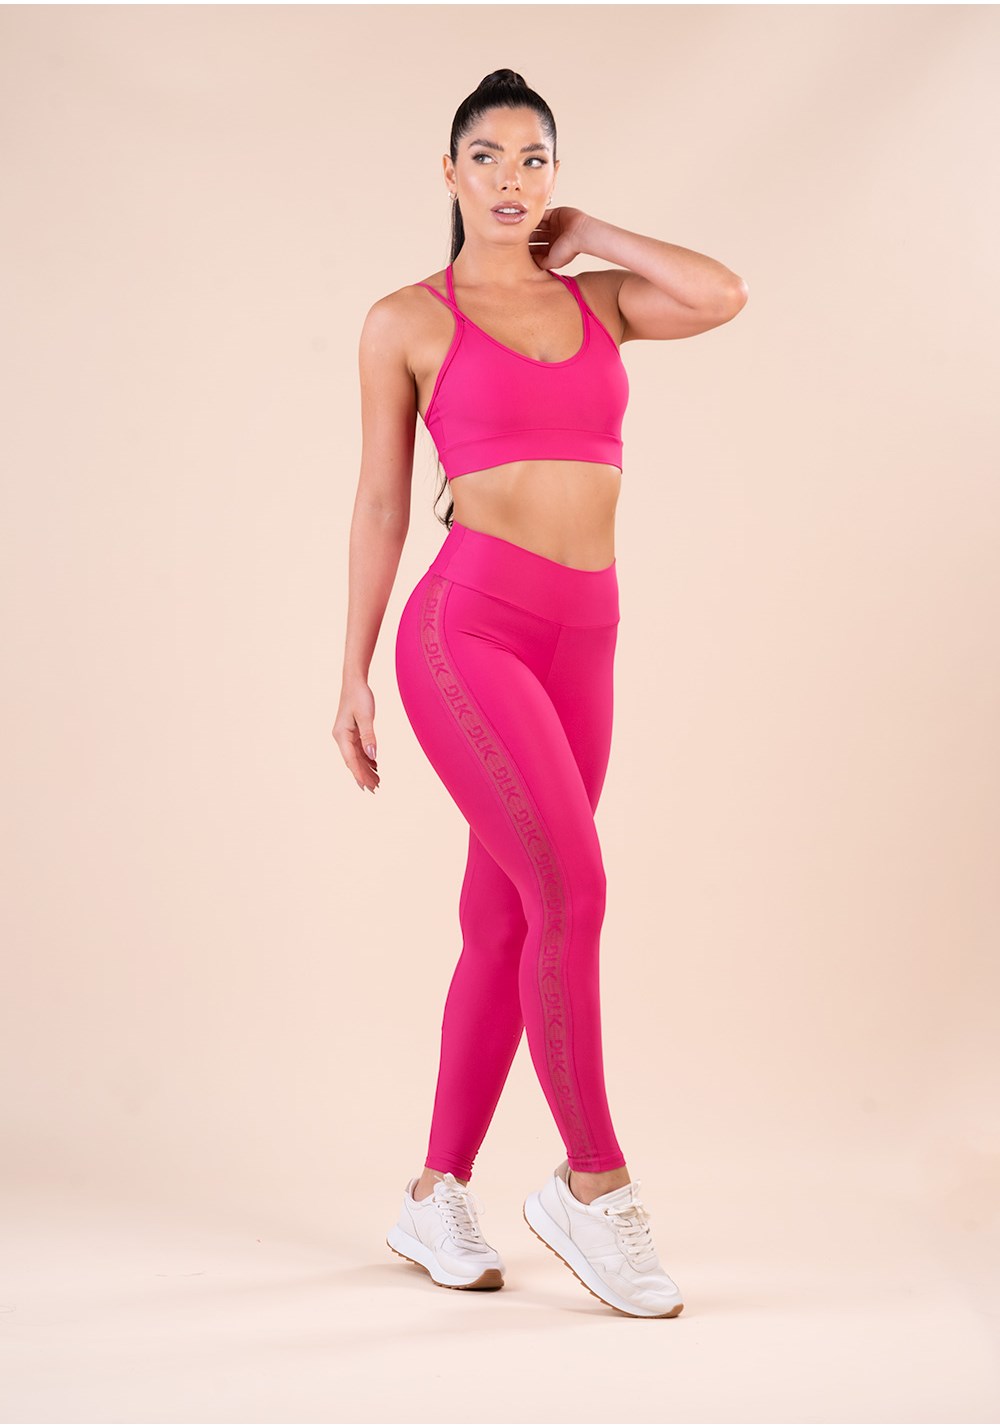 https://dlkmodas.fbitsstatic.net/img/p/top-fitness-feminino-com-bojo-pink-alca-dupla-e-elastico-action-81961/302872-1.jpg?w=1000&h=1428&v=no-value